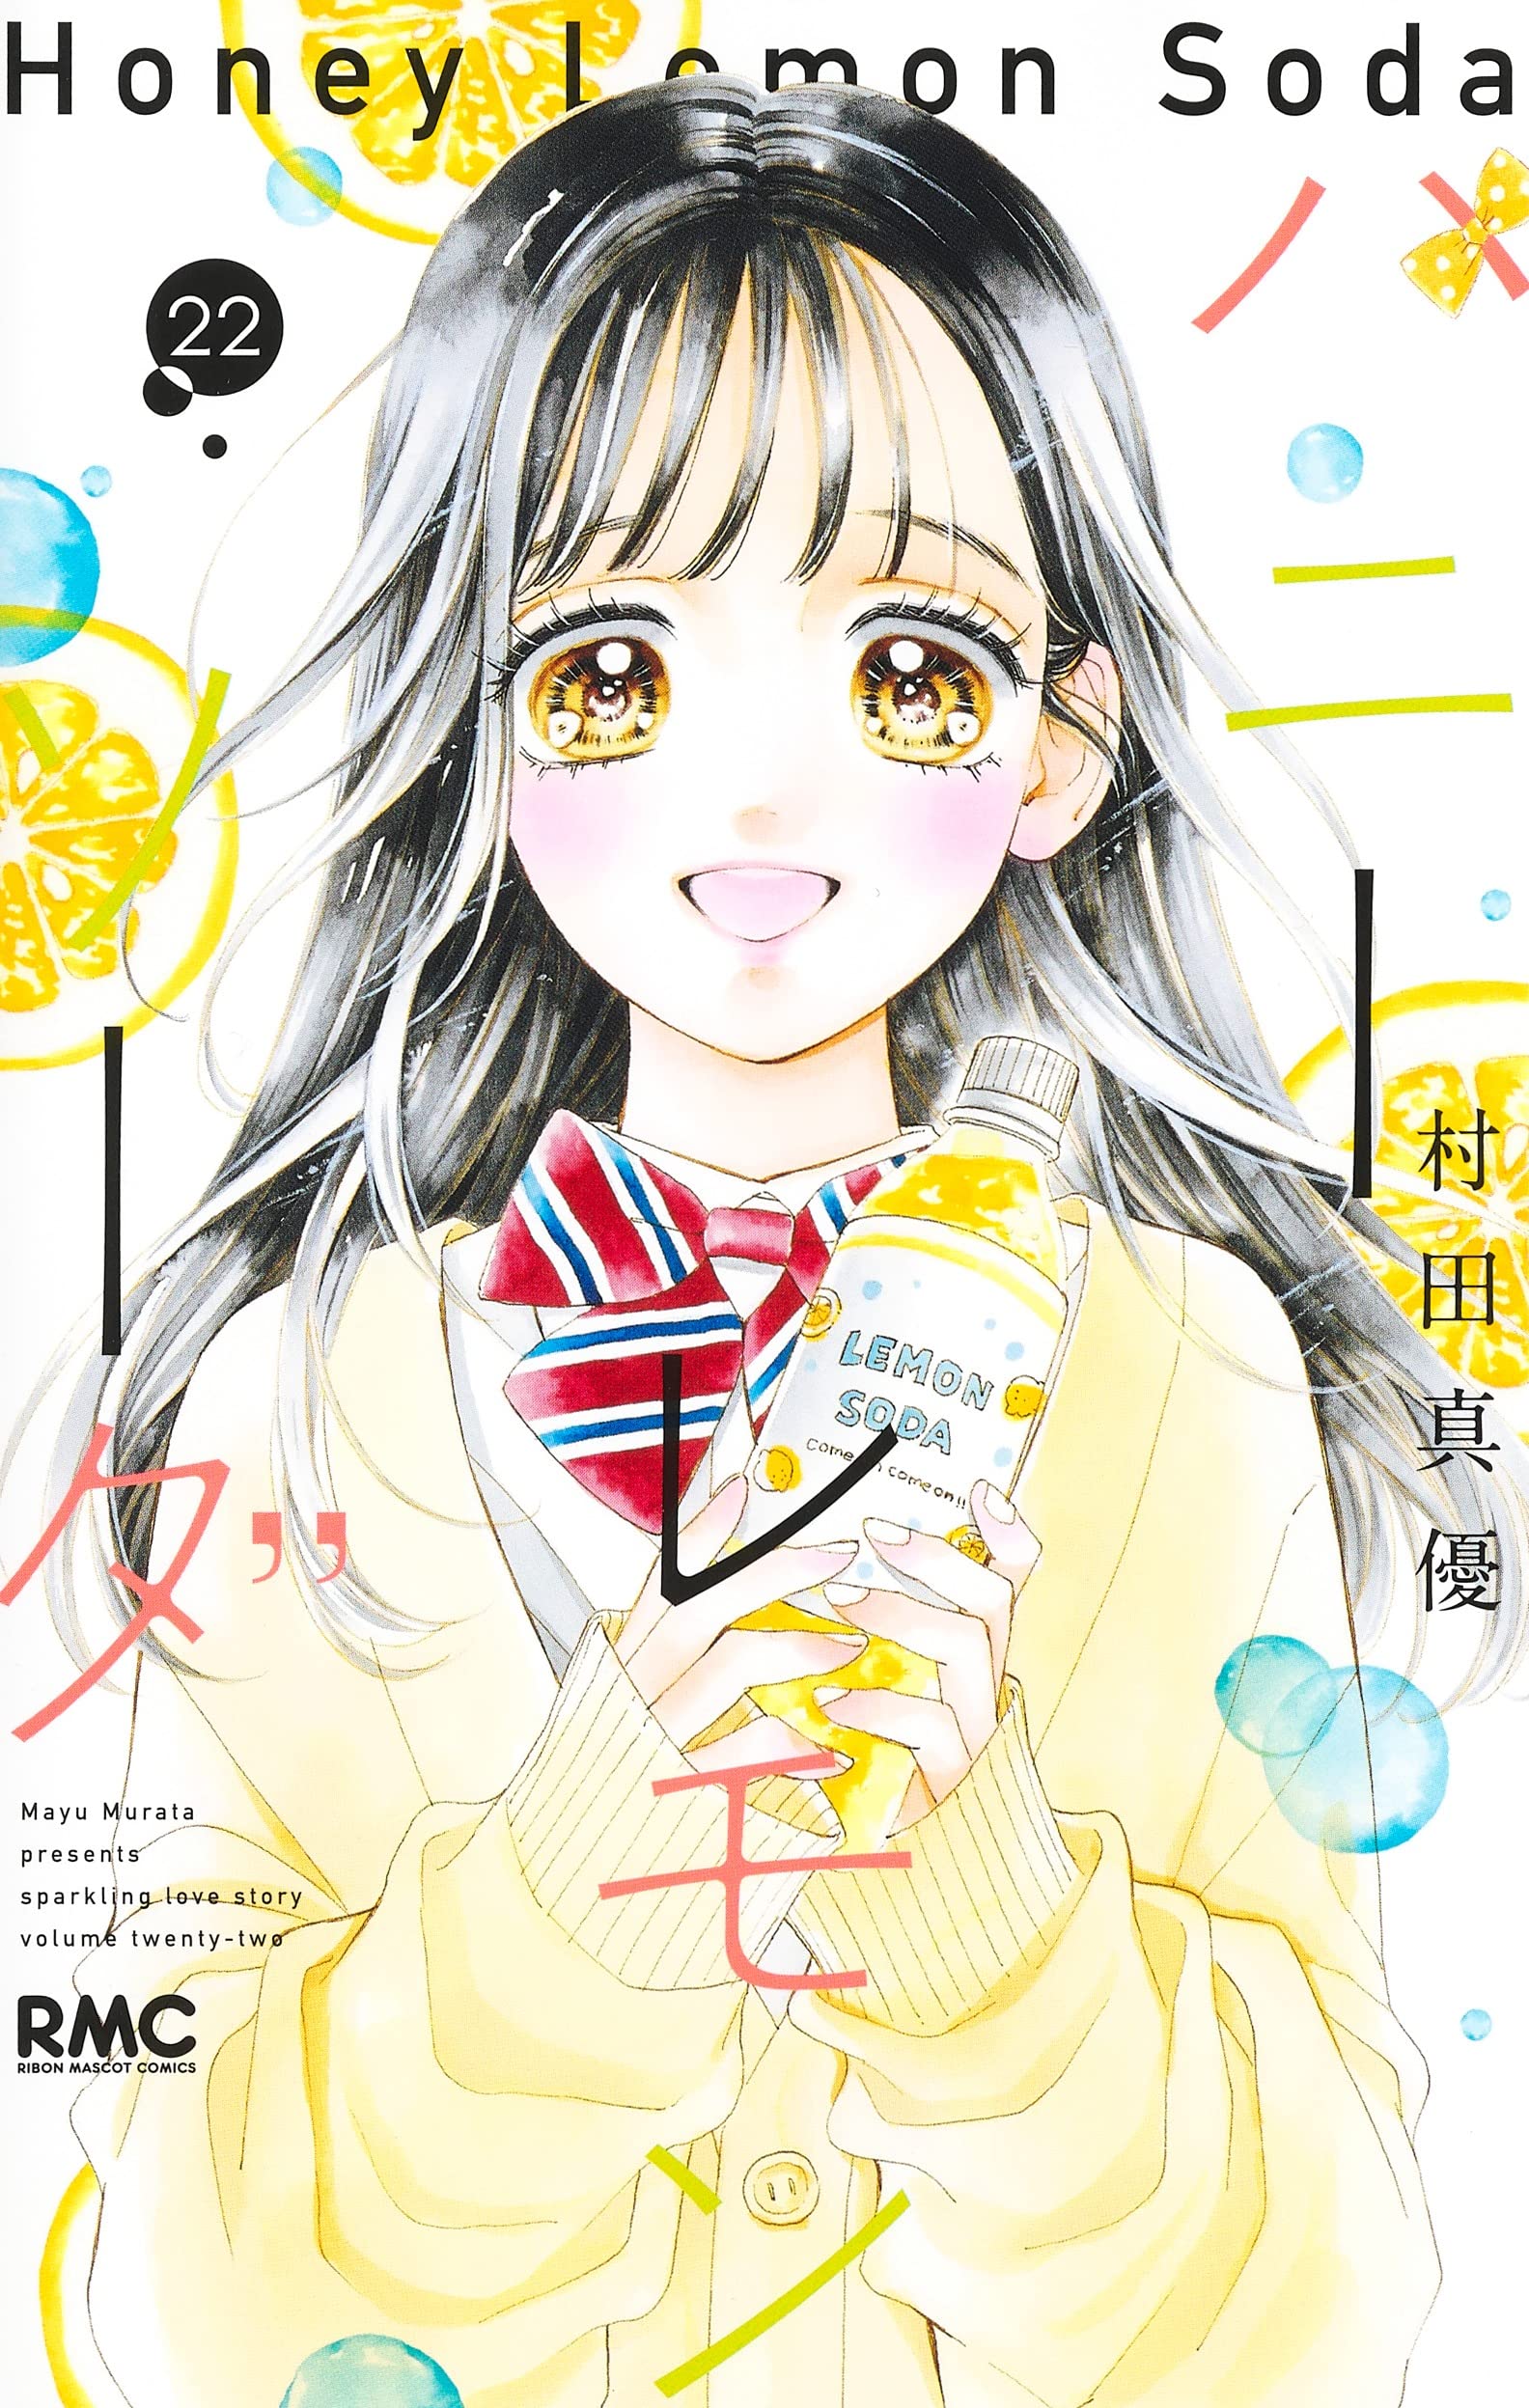 Манга лимон. Манга сладкий лимонад. Honey Lemon Soda Manga. Сладкий лимонад Honey Lemon Soda. Мед лимон сода дорама.